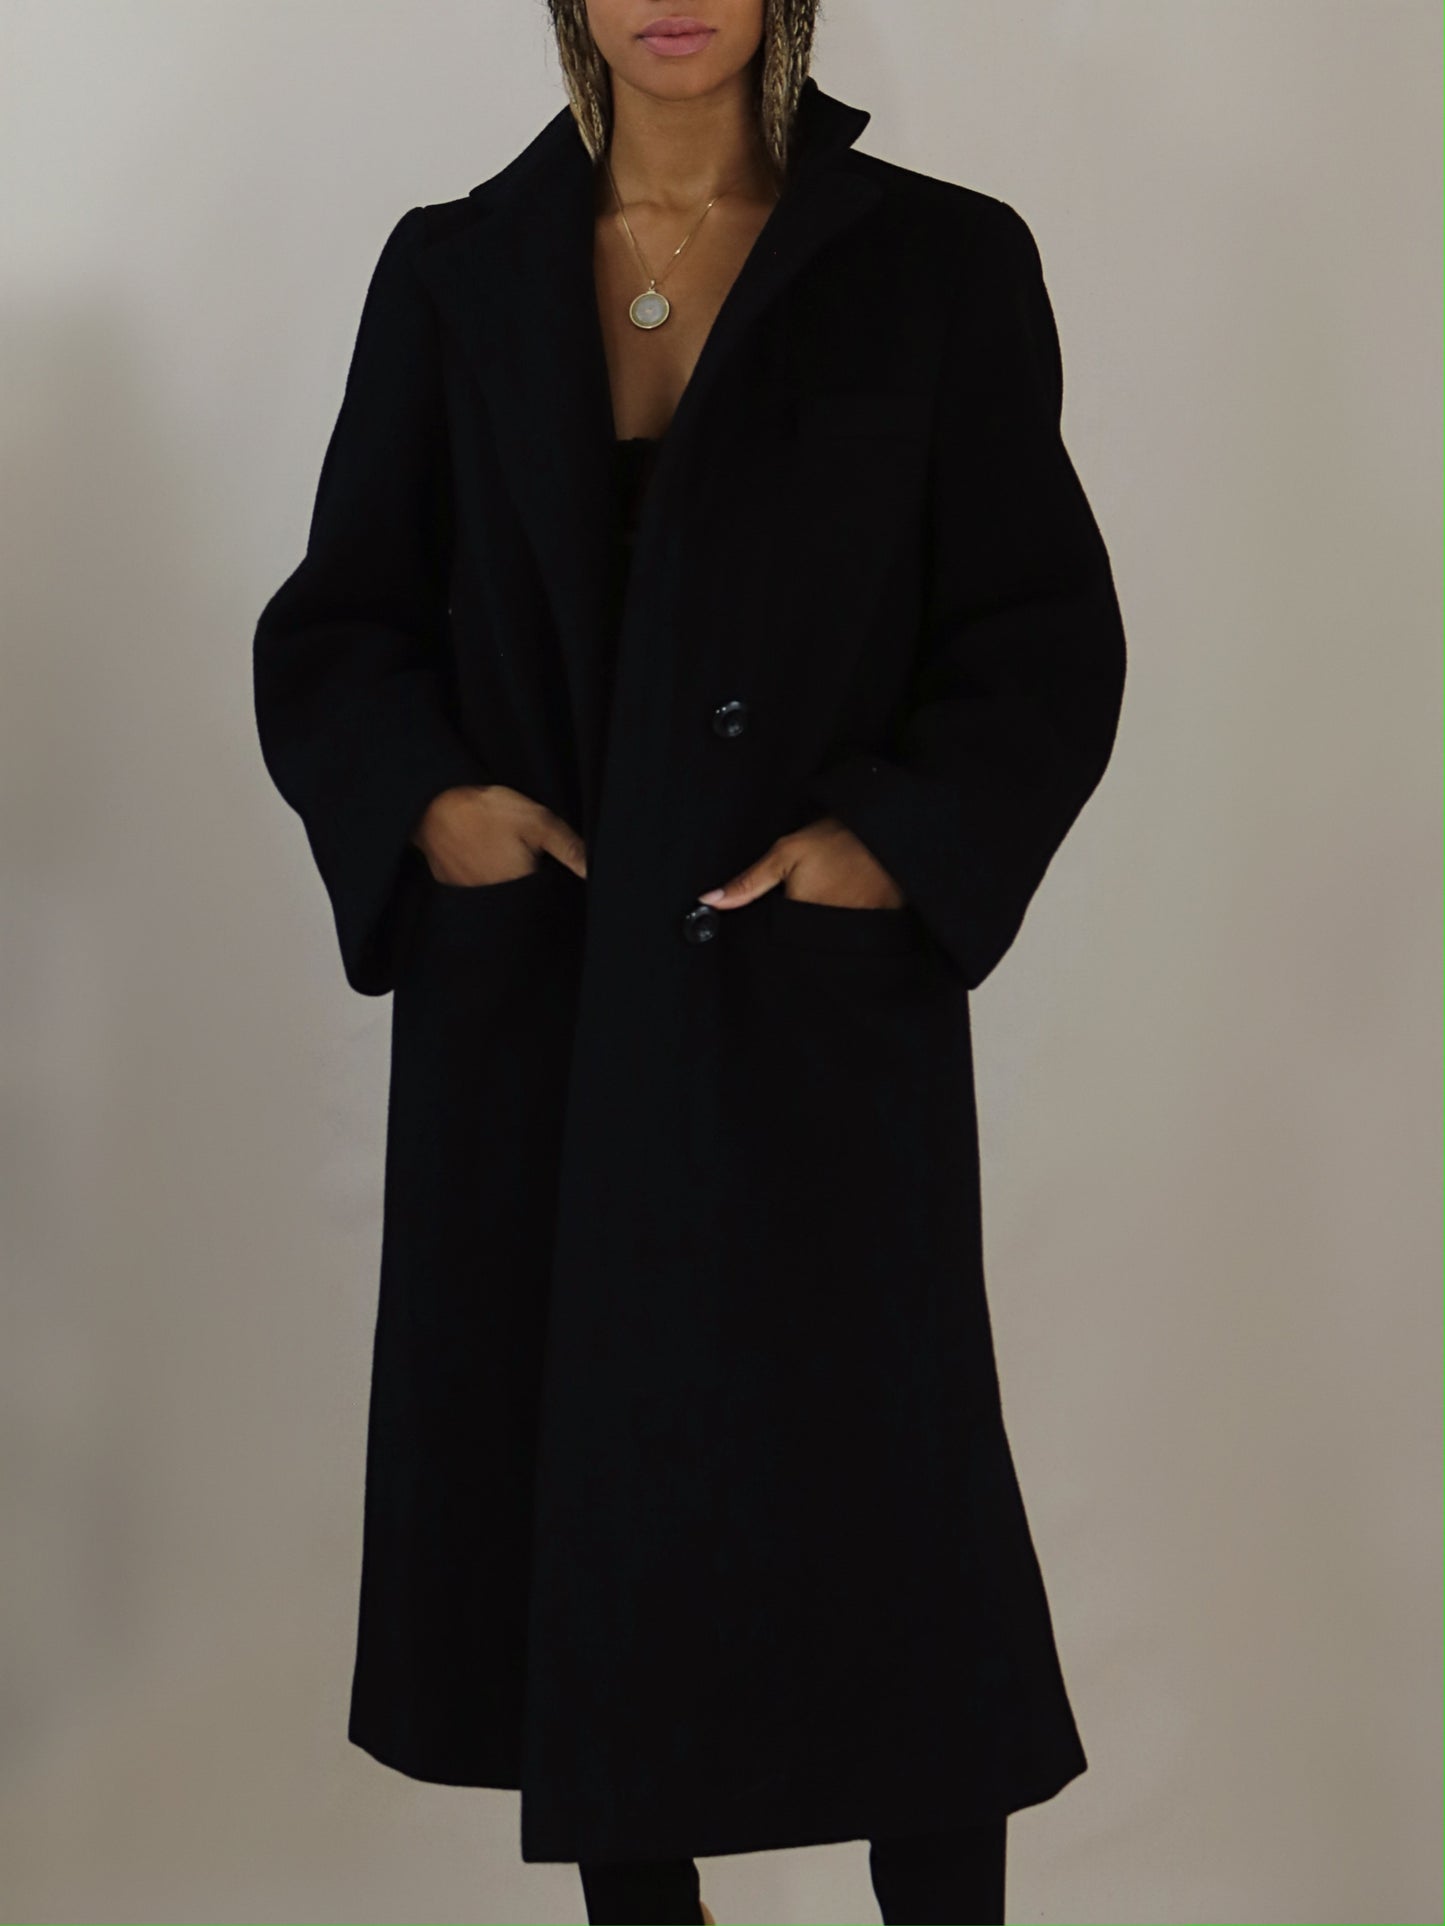 a trigere coat, black wool